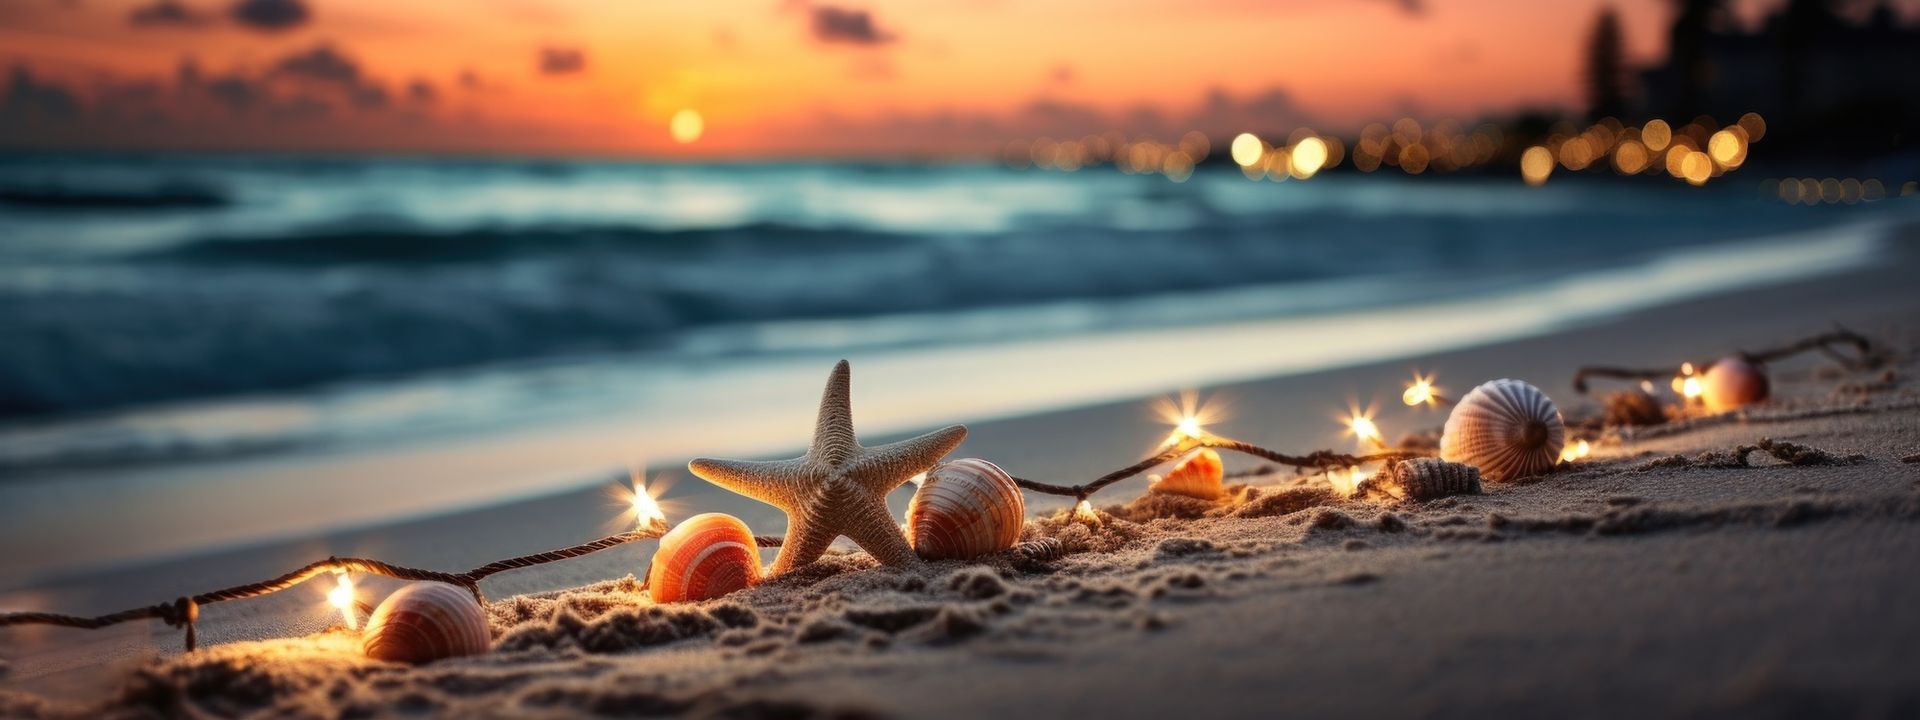 DormFIN Insurance Broker A starfish , seashells and 
christmas lights on the beach at sunset.